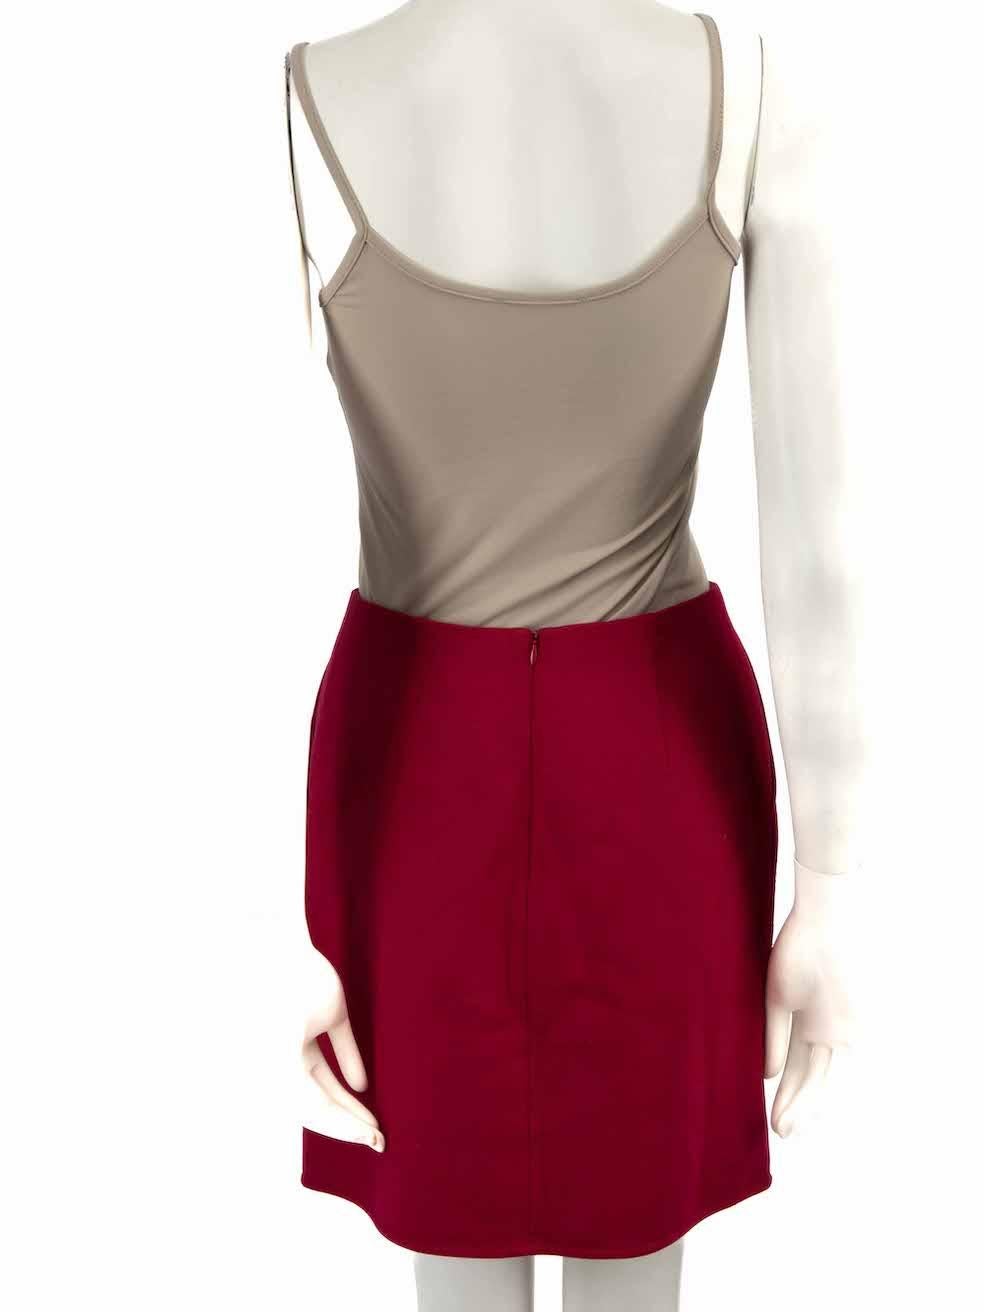 Paule Ka Burgundy Virgin Wool Mini Skirt Size S In Good Condition For Sale In London, GB